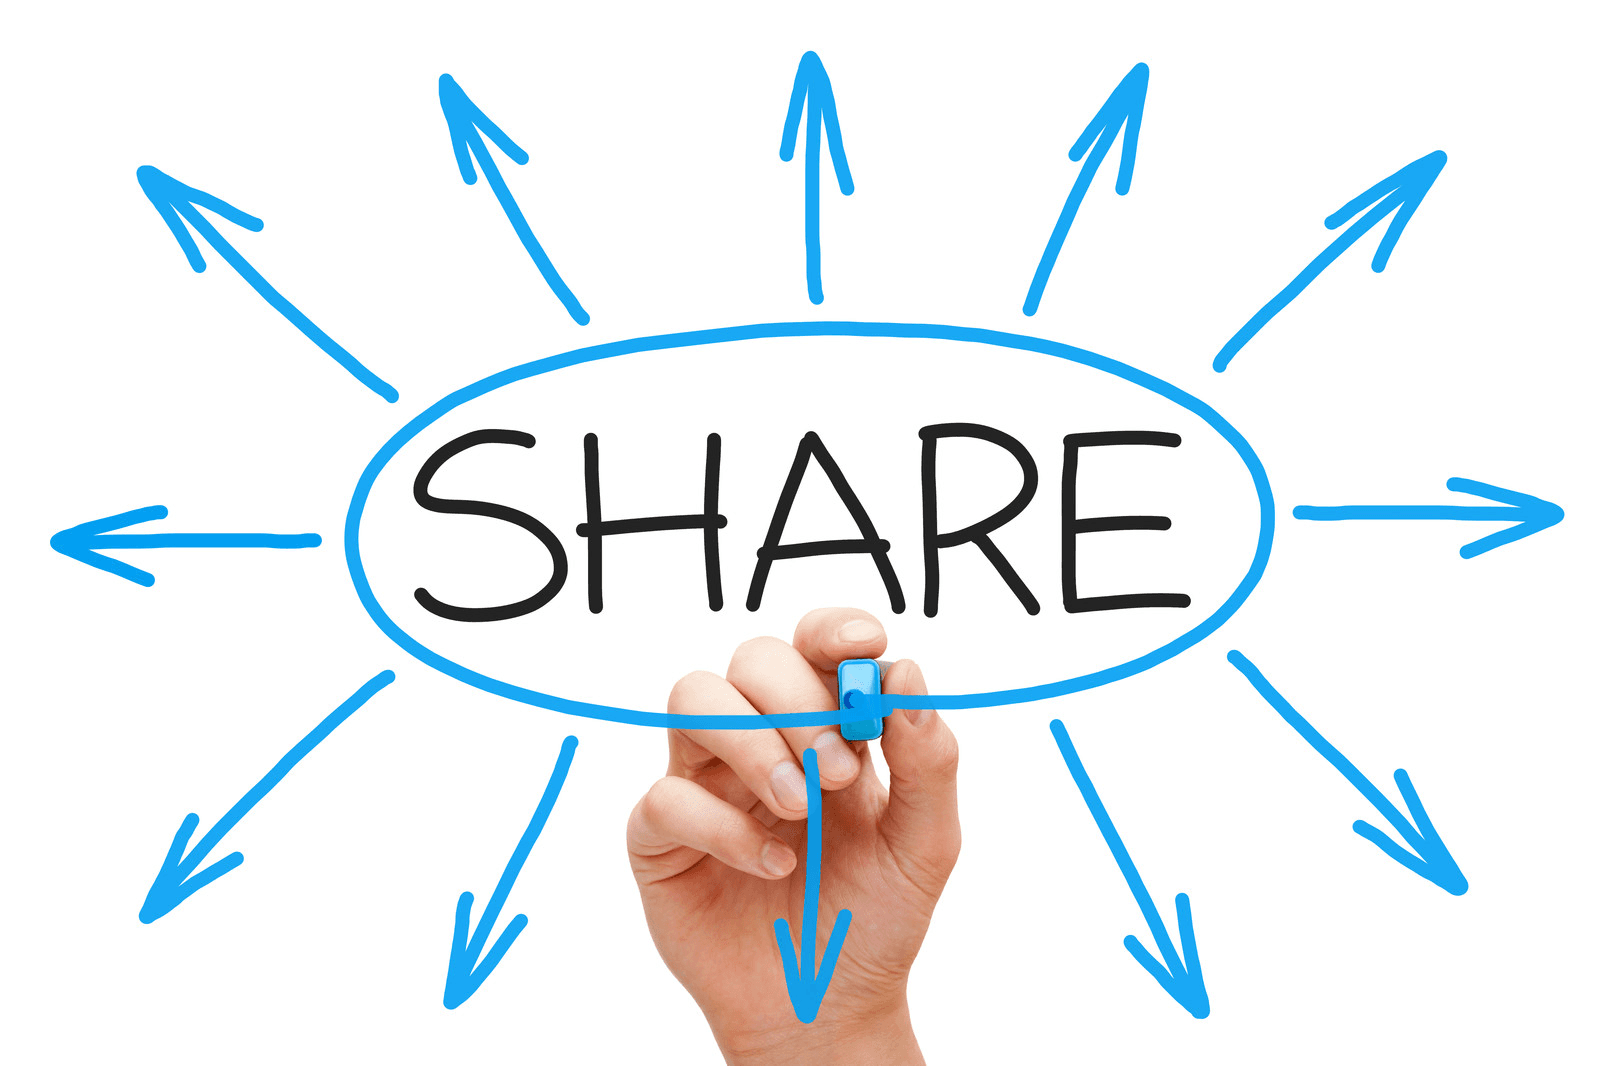 Account sharing